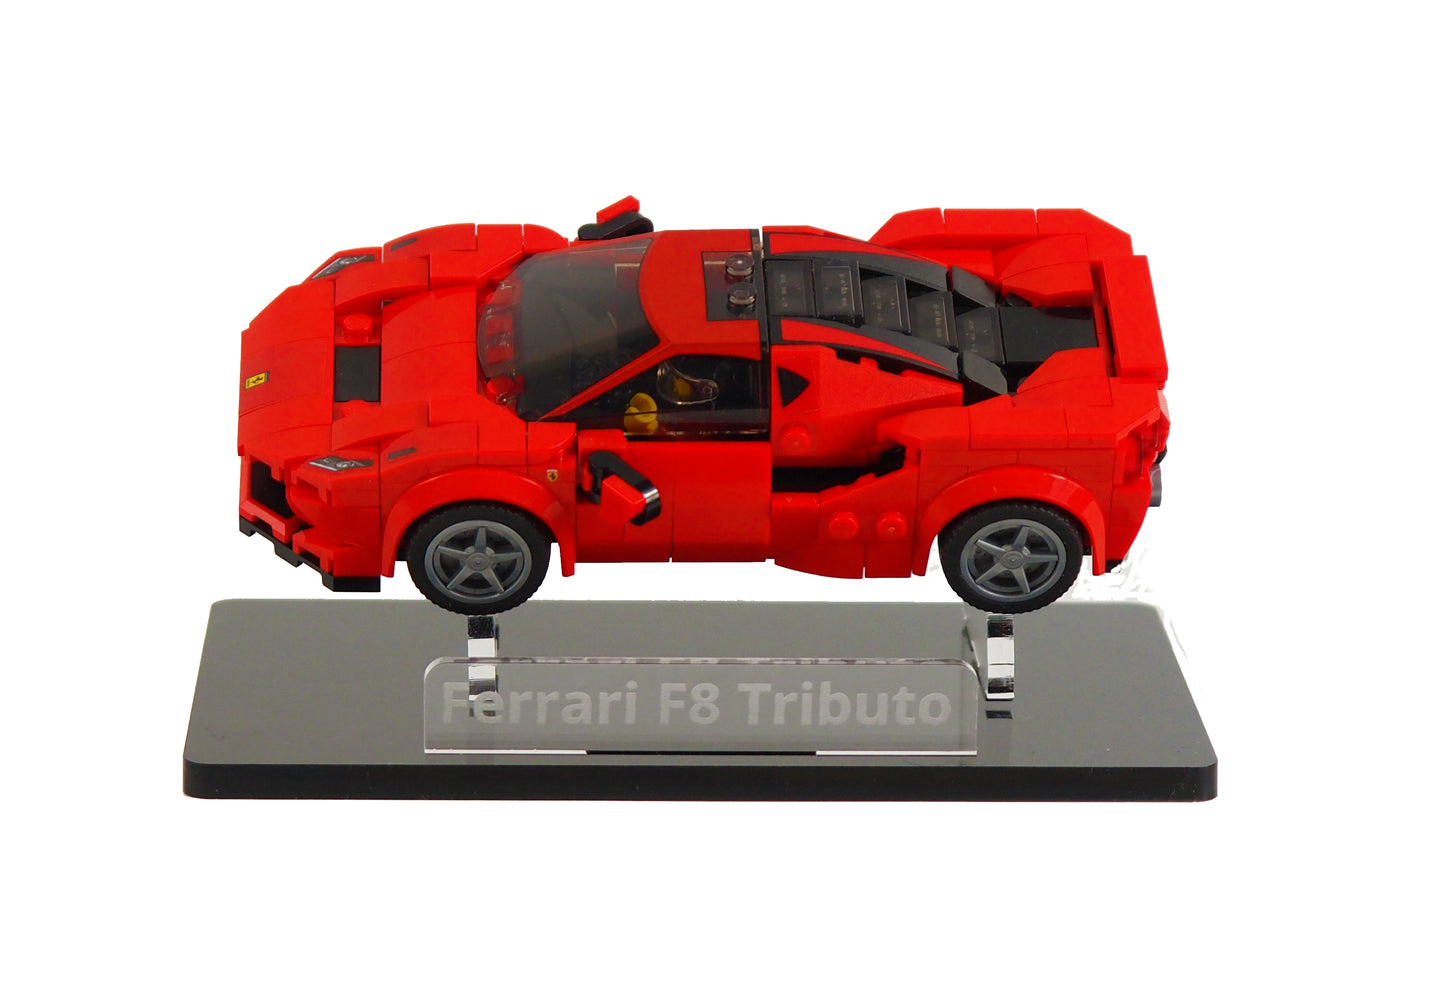 Display Stand for LEGO Ferrari F8 Tributo (76895) Set